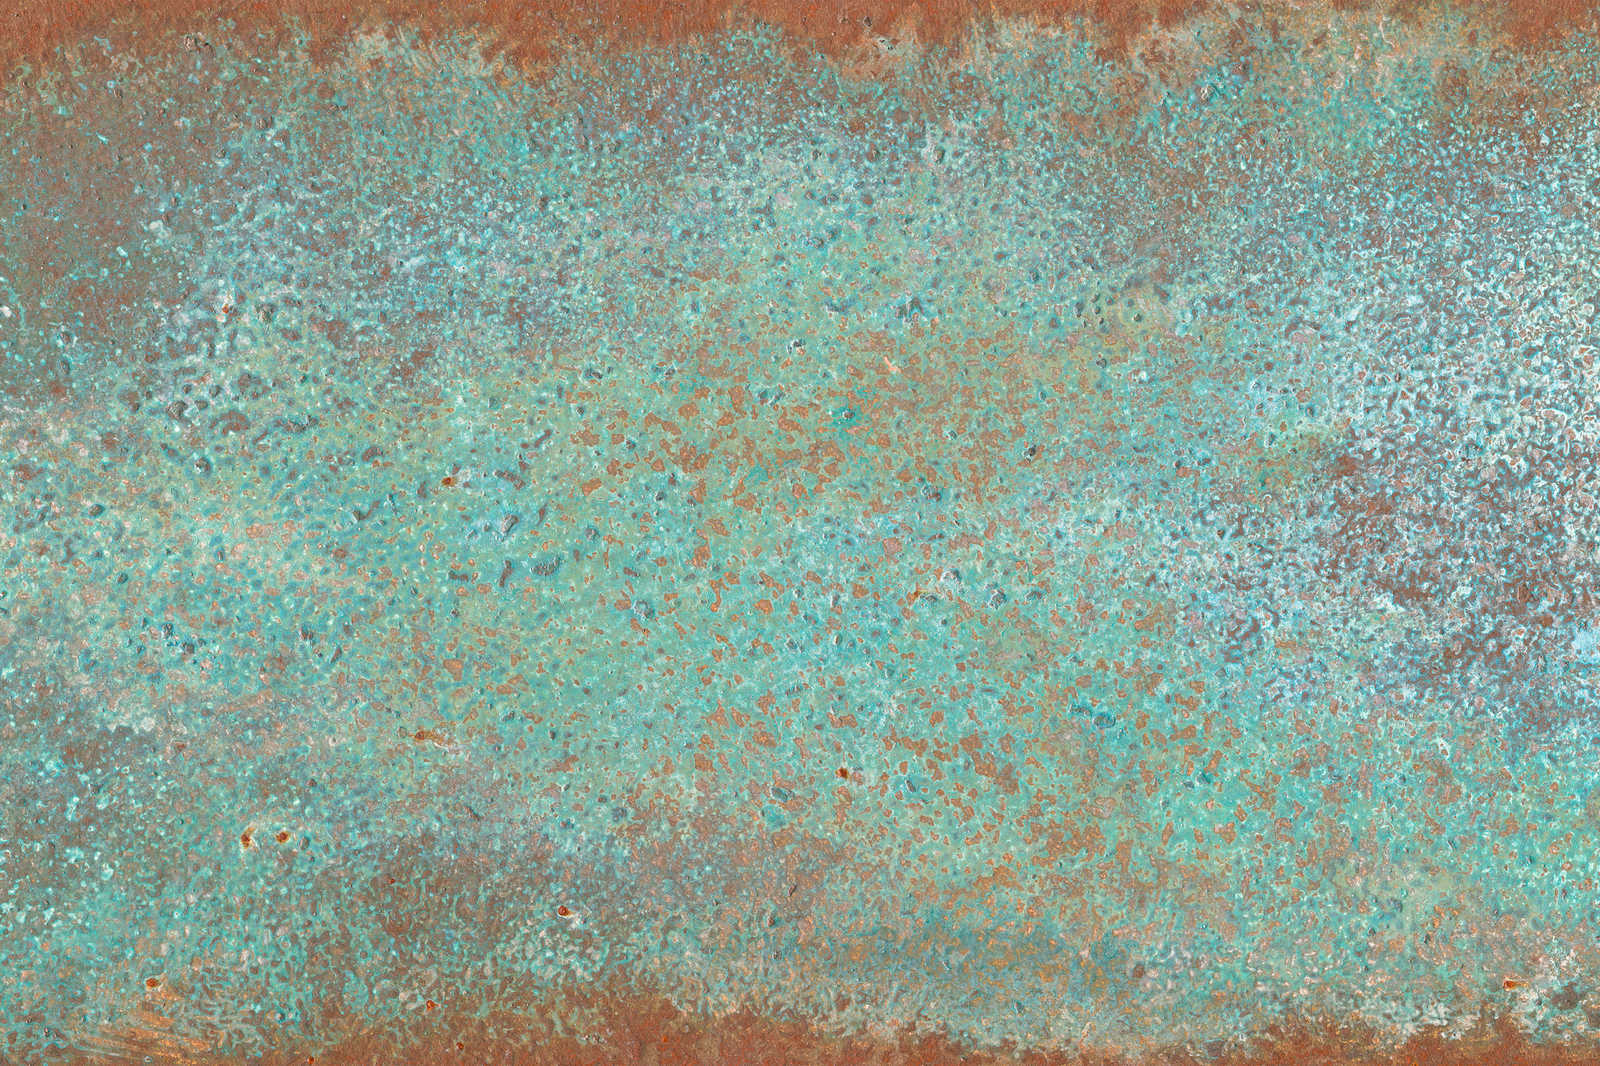             Metal Optics Canvas Schilderij Turquoise Patina met Roest - 1.20 m x 0.80 m
        